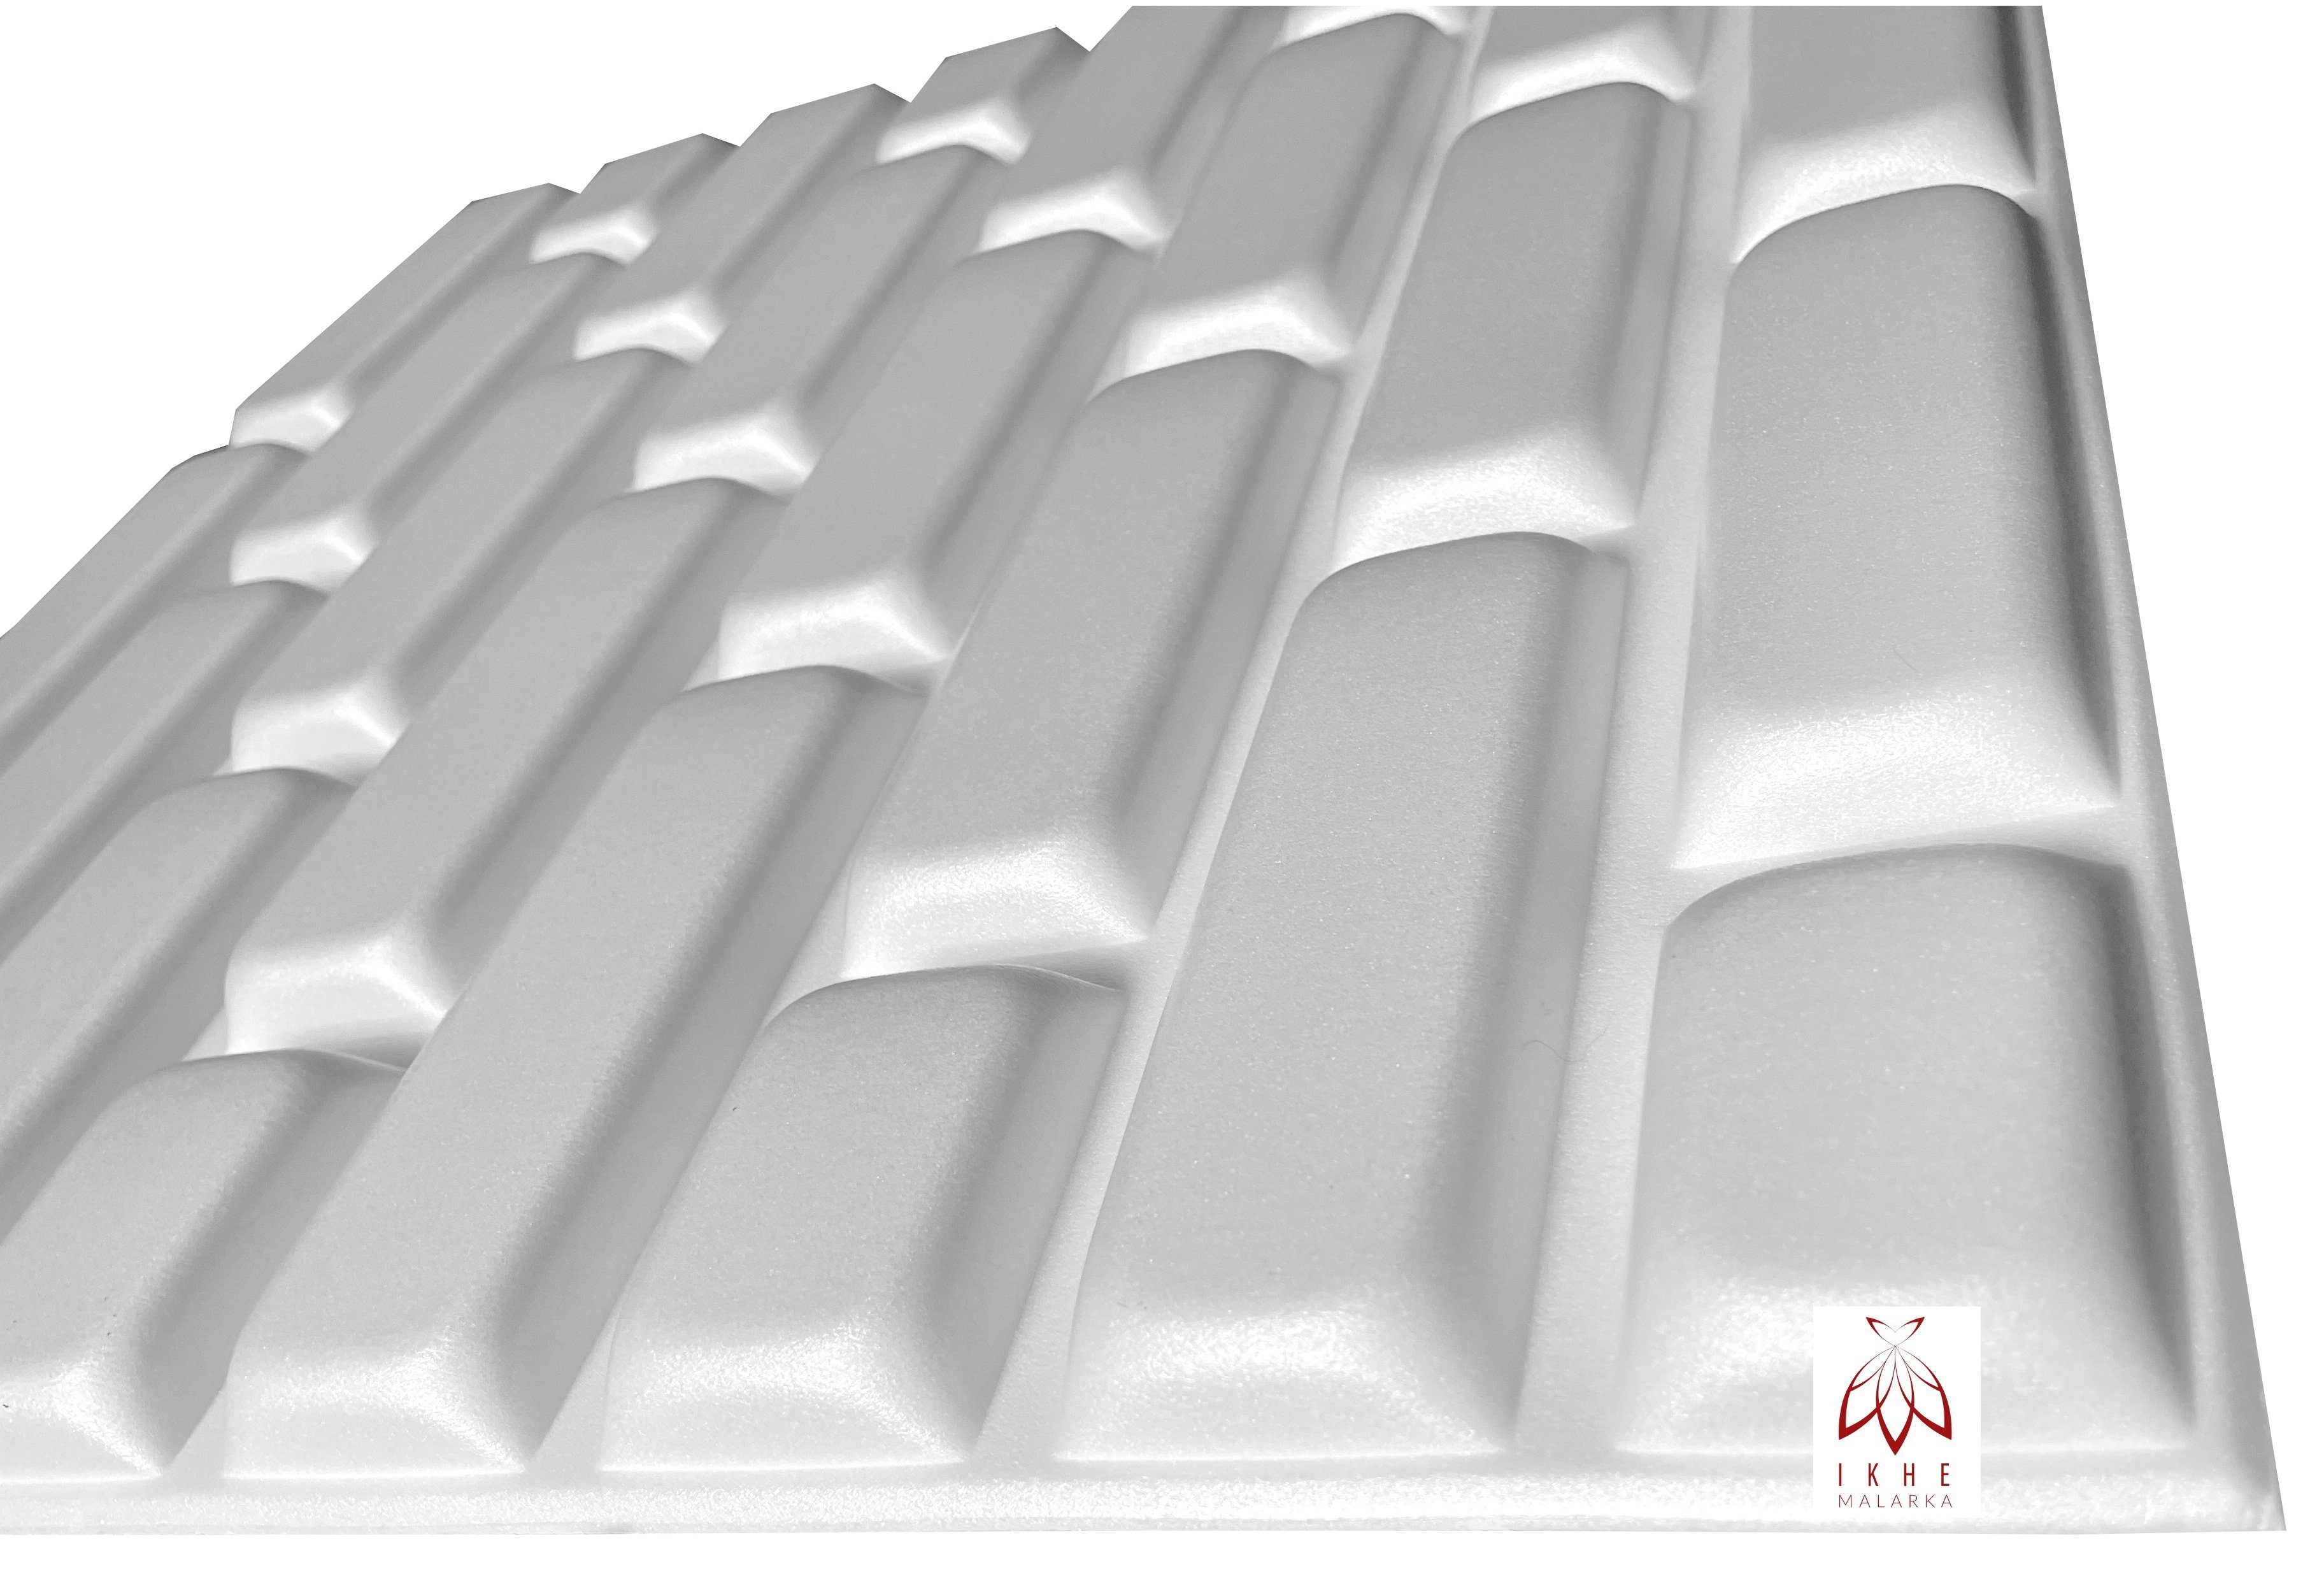 cm, Deckenpaneele Ziegel, Wandpaneel POLYSTYROL IKHEMalarka qm 2m²/8PCS 50,00x50,00 0,50 3D Wandpaneele White BxL: